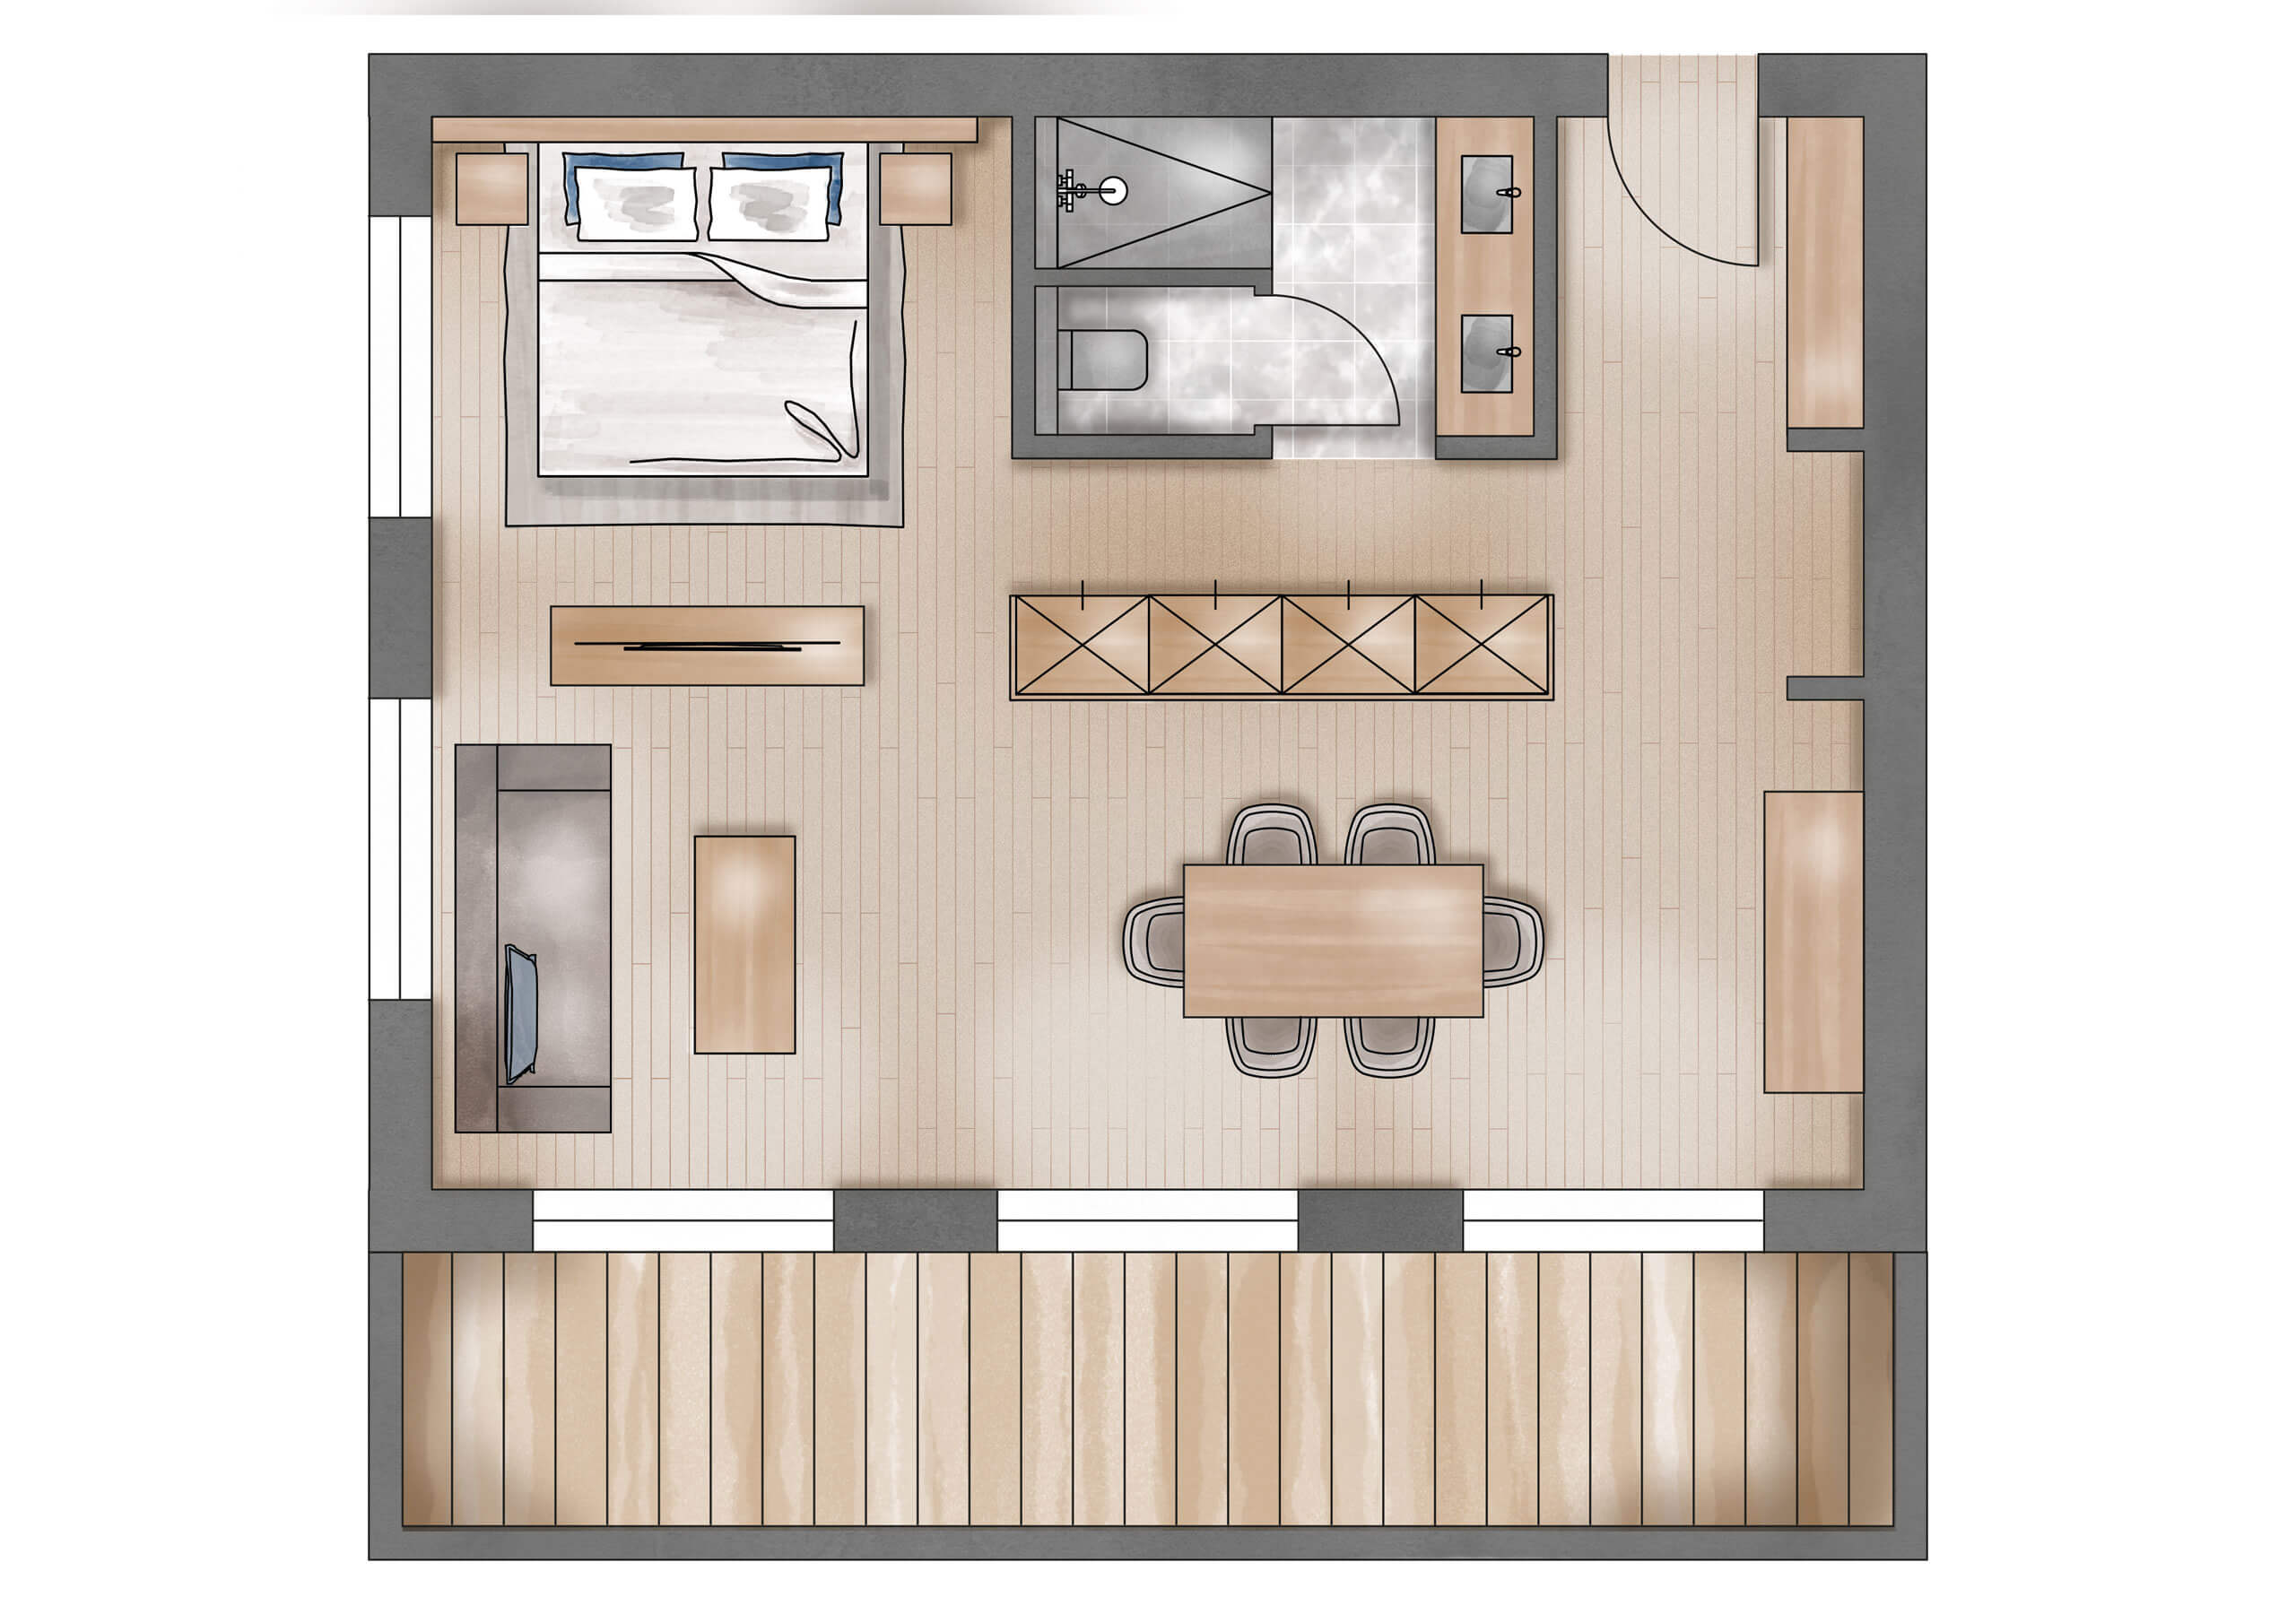 A floor plan of a house